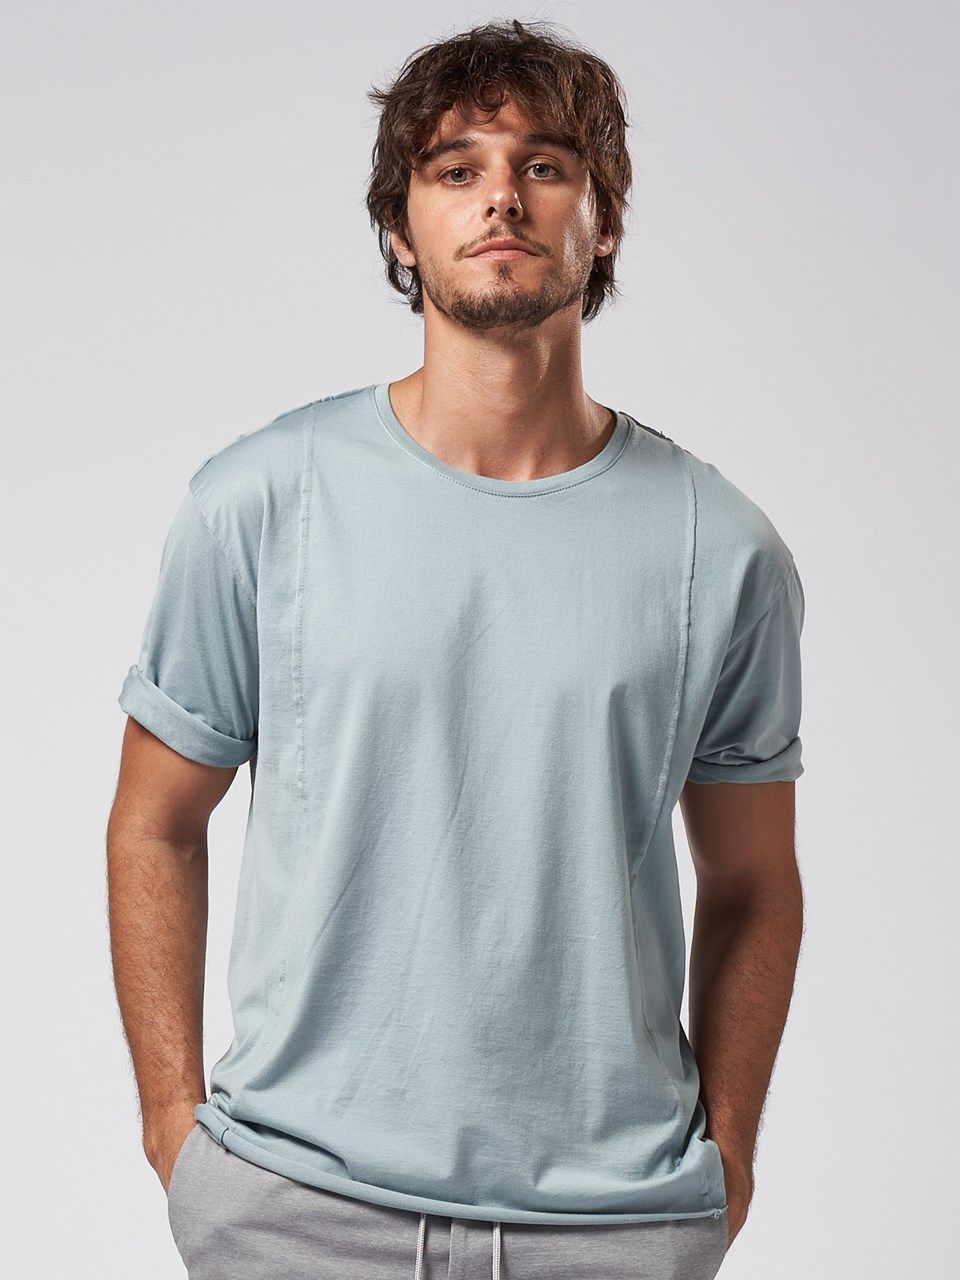 wjk - 《予約品》 roll-up sleeve cut&sewn / Tシャツ / アイスブルー